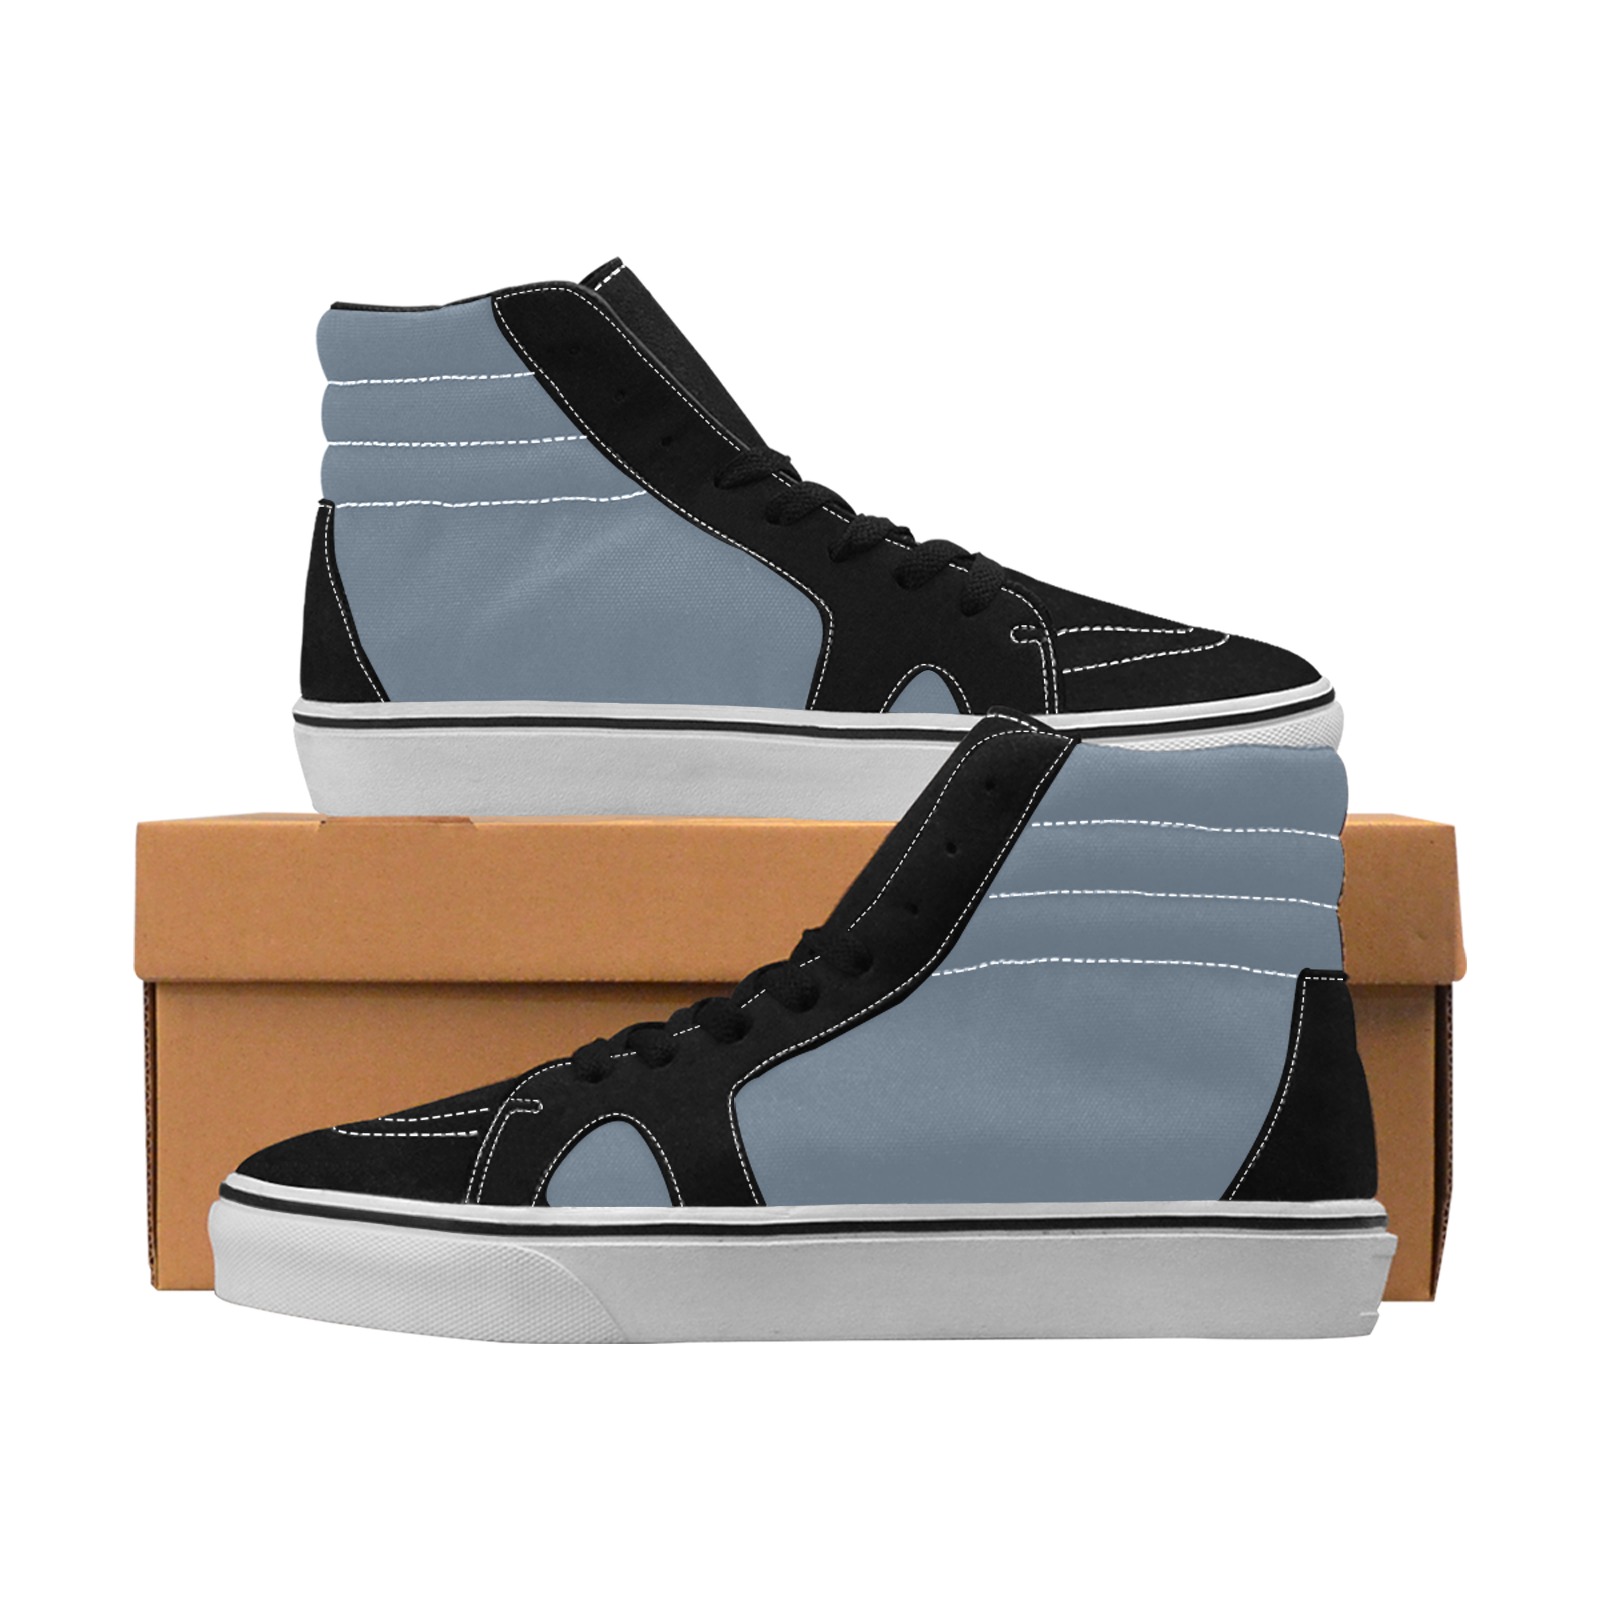 color slate grey Men's High Top Skateboarding Shoes (Model E001-1)